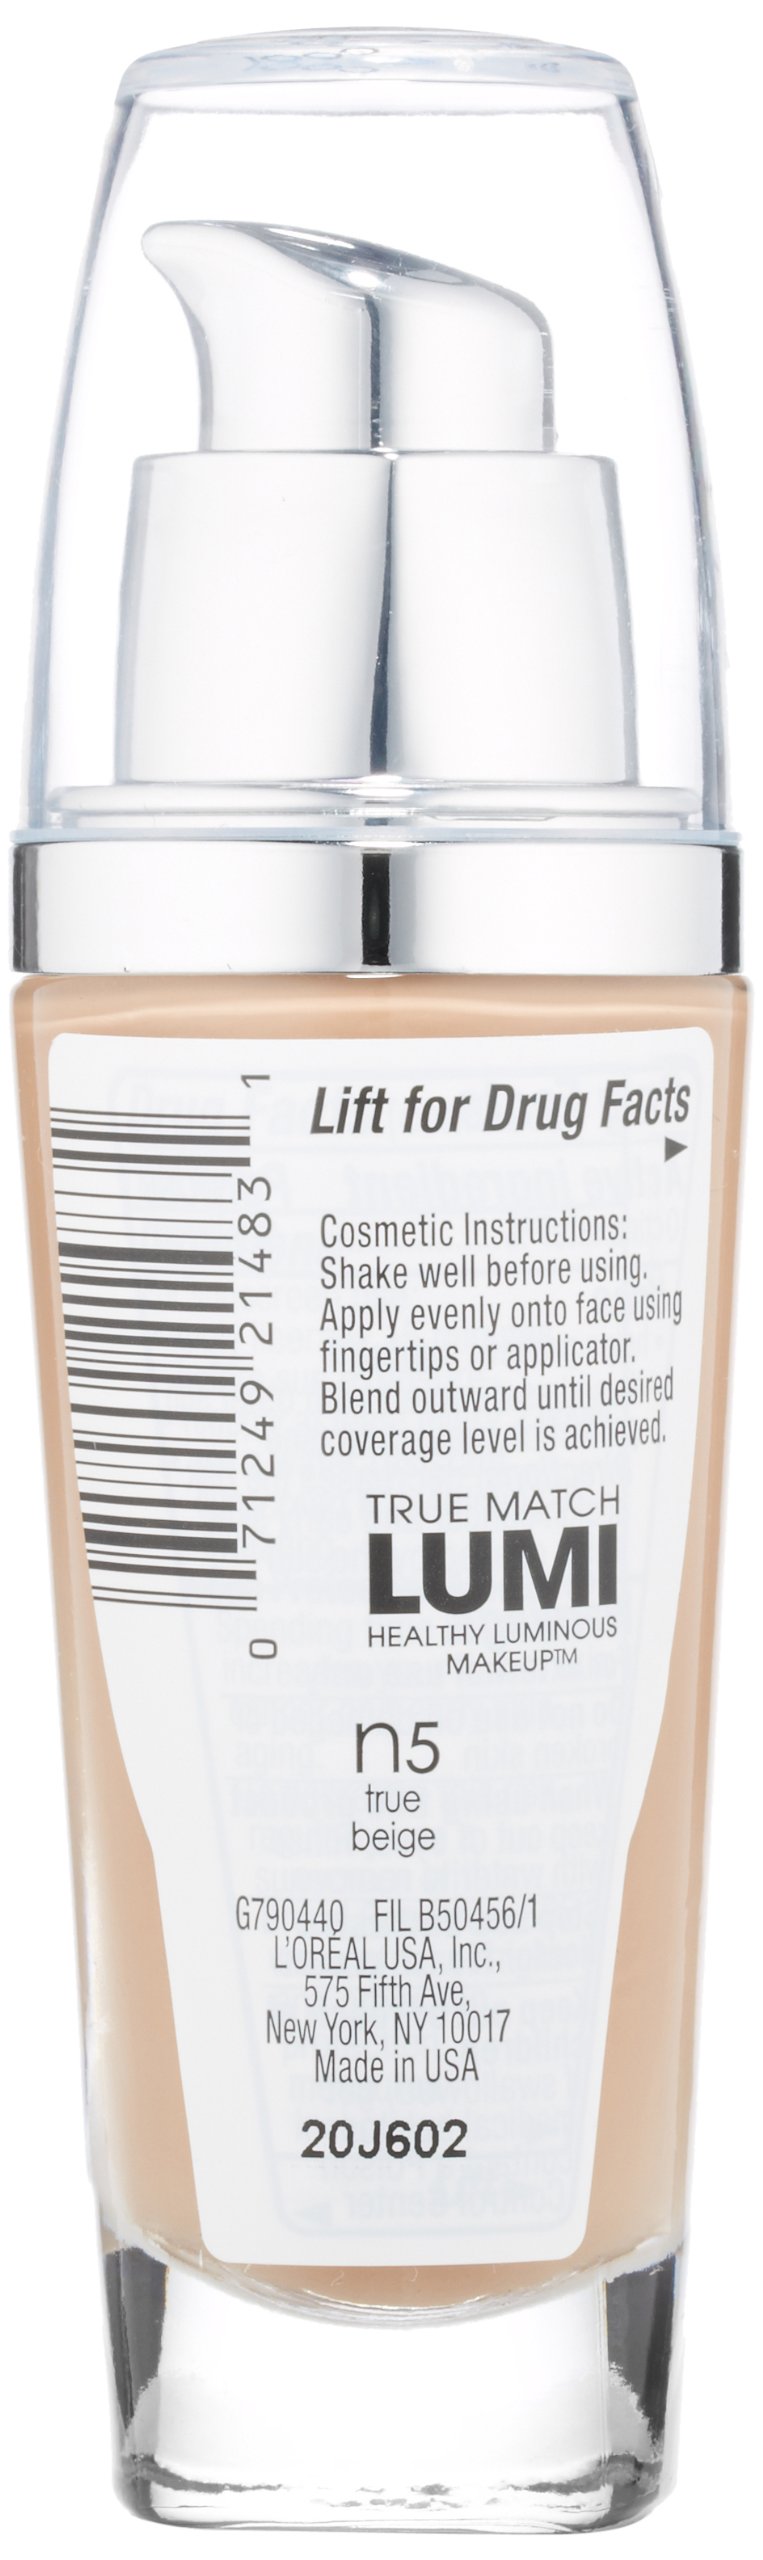 L'Oreal Paris True Match Lumi Healthy Luminous Makeup, N5 True Beige, 1 fl; oz. (Pack of 2)